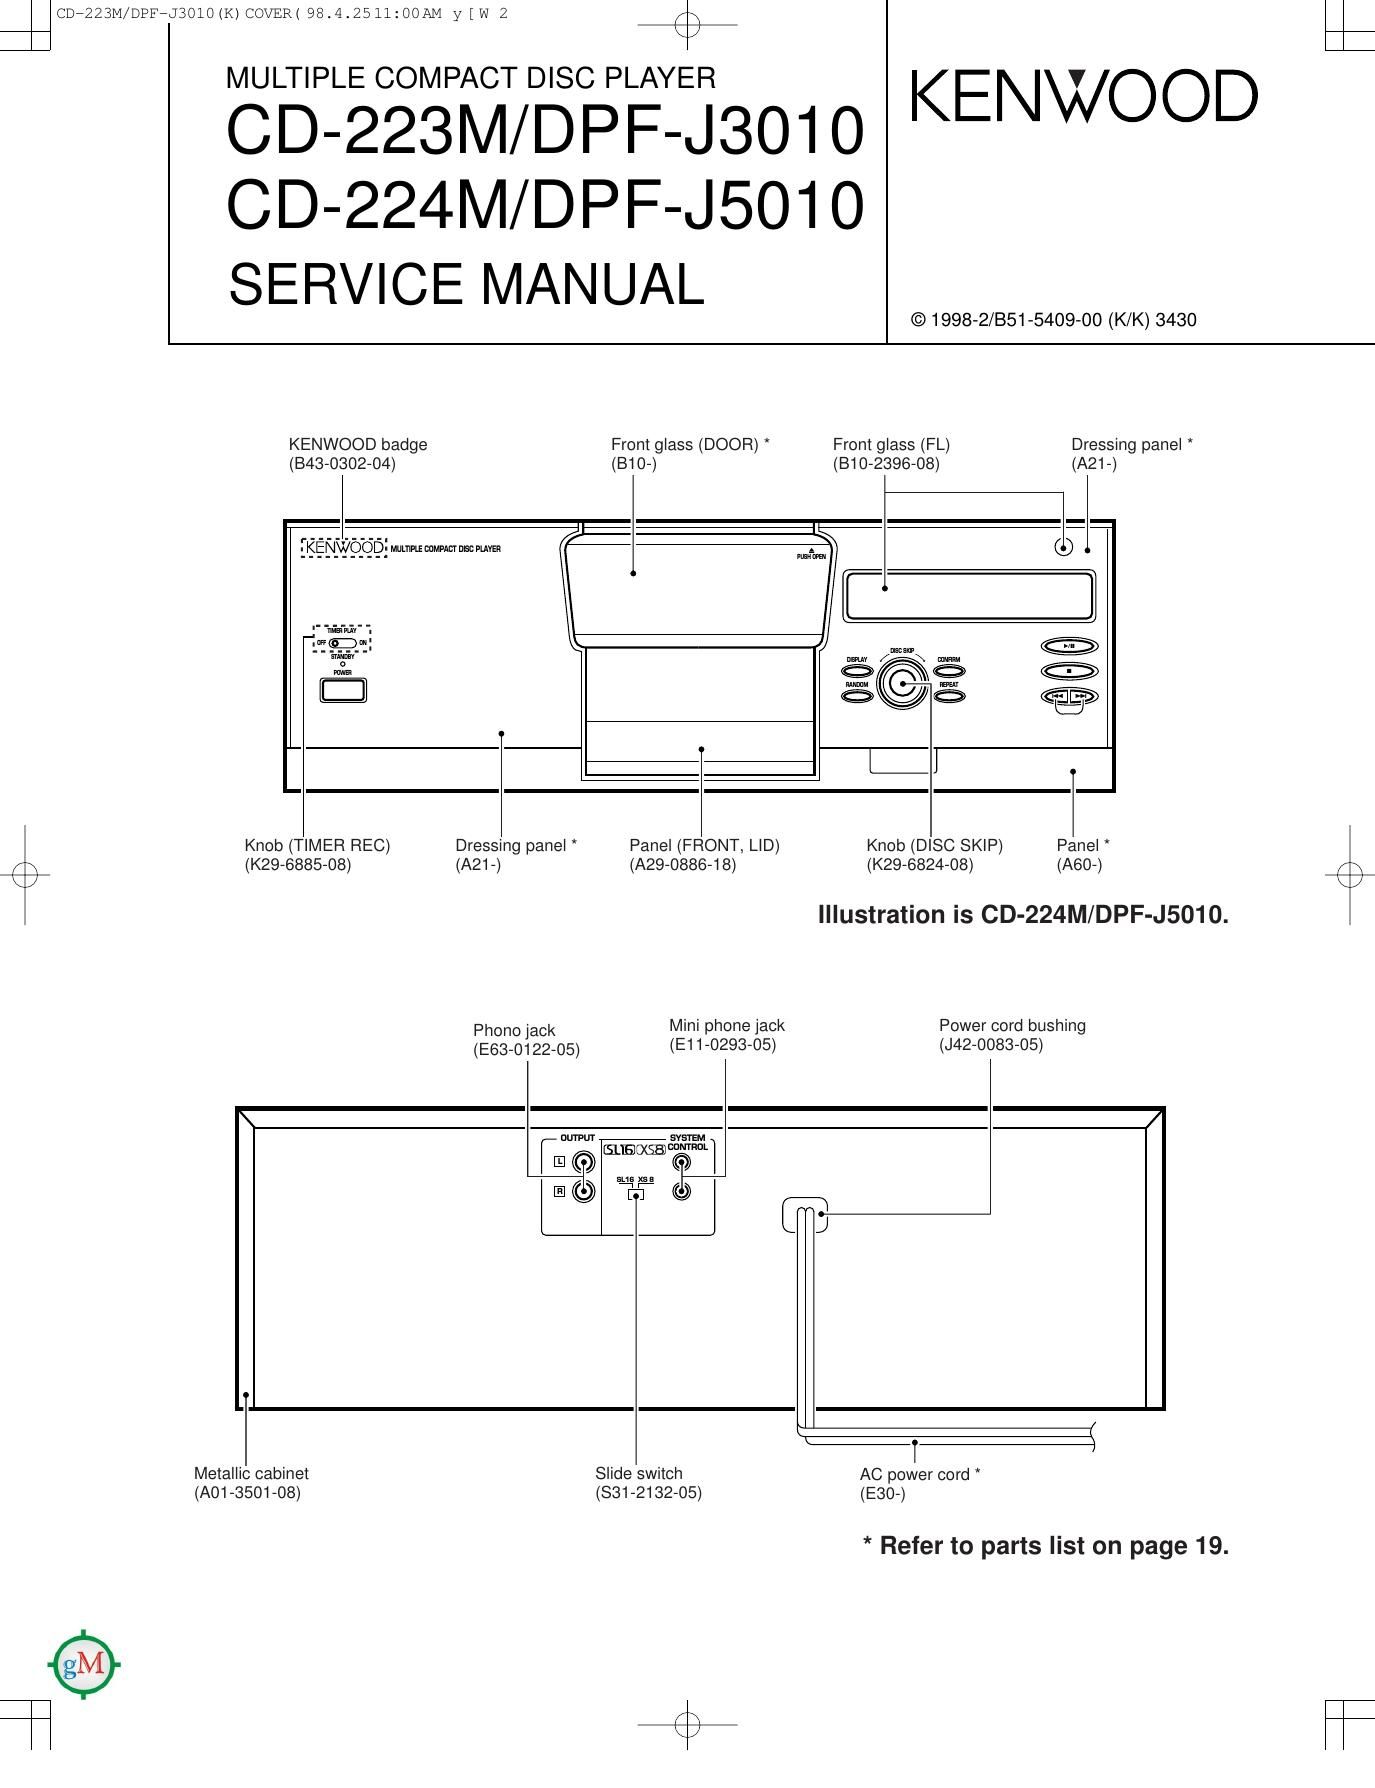 Kenwood DPFJ 5010 Service Manual